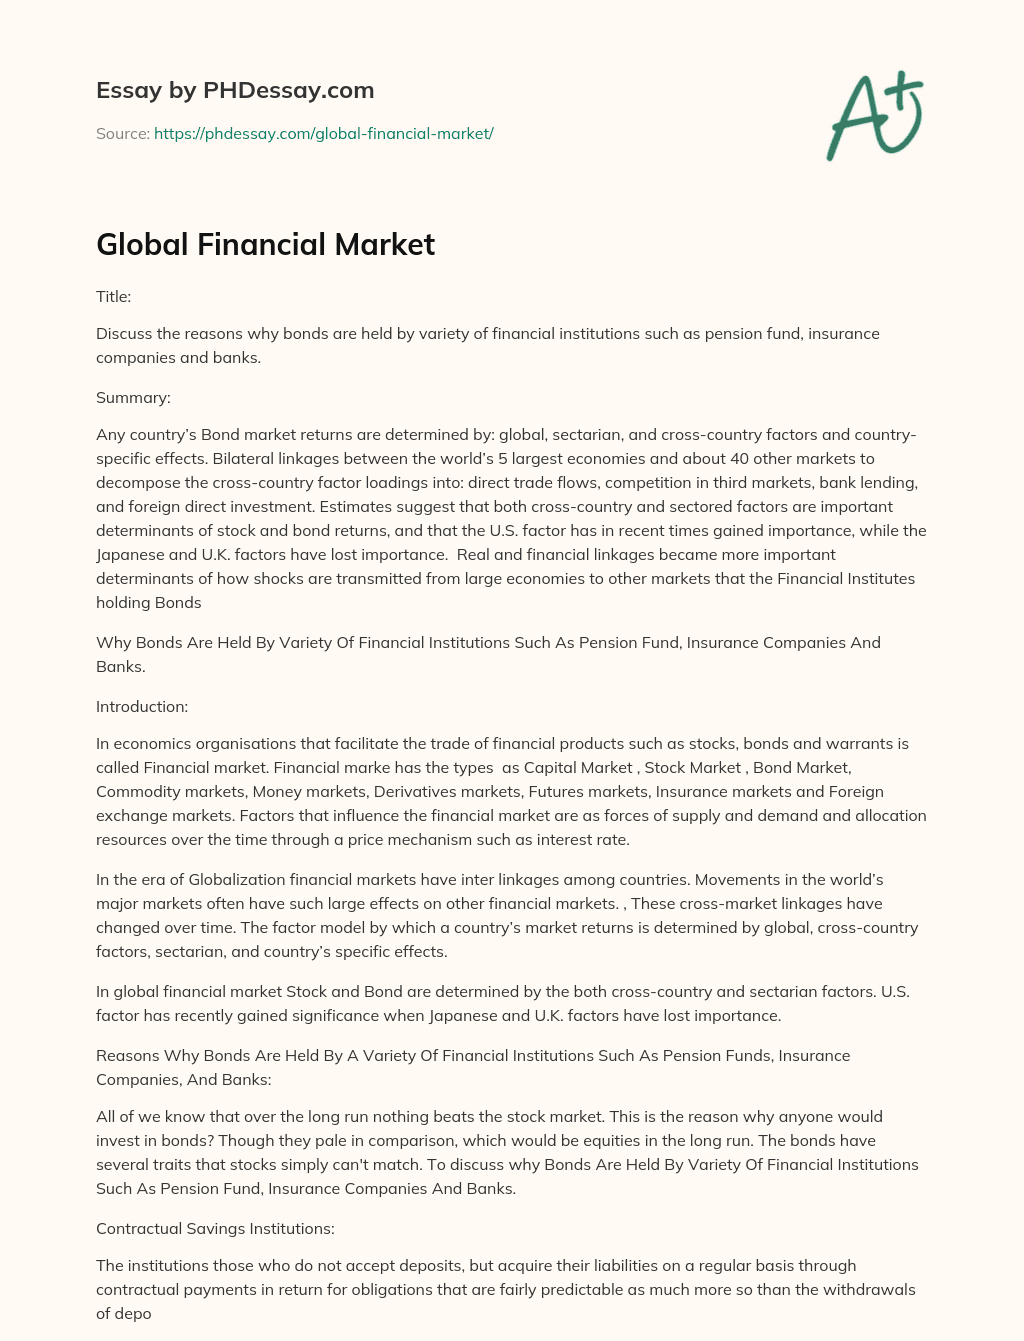 Global Financial Market essay